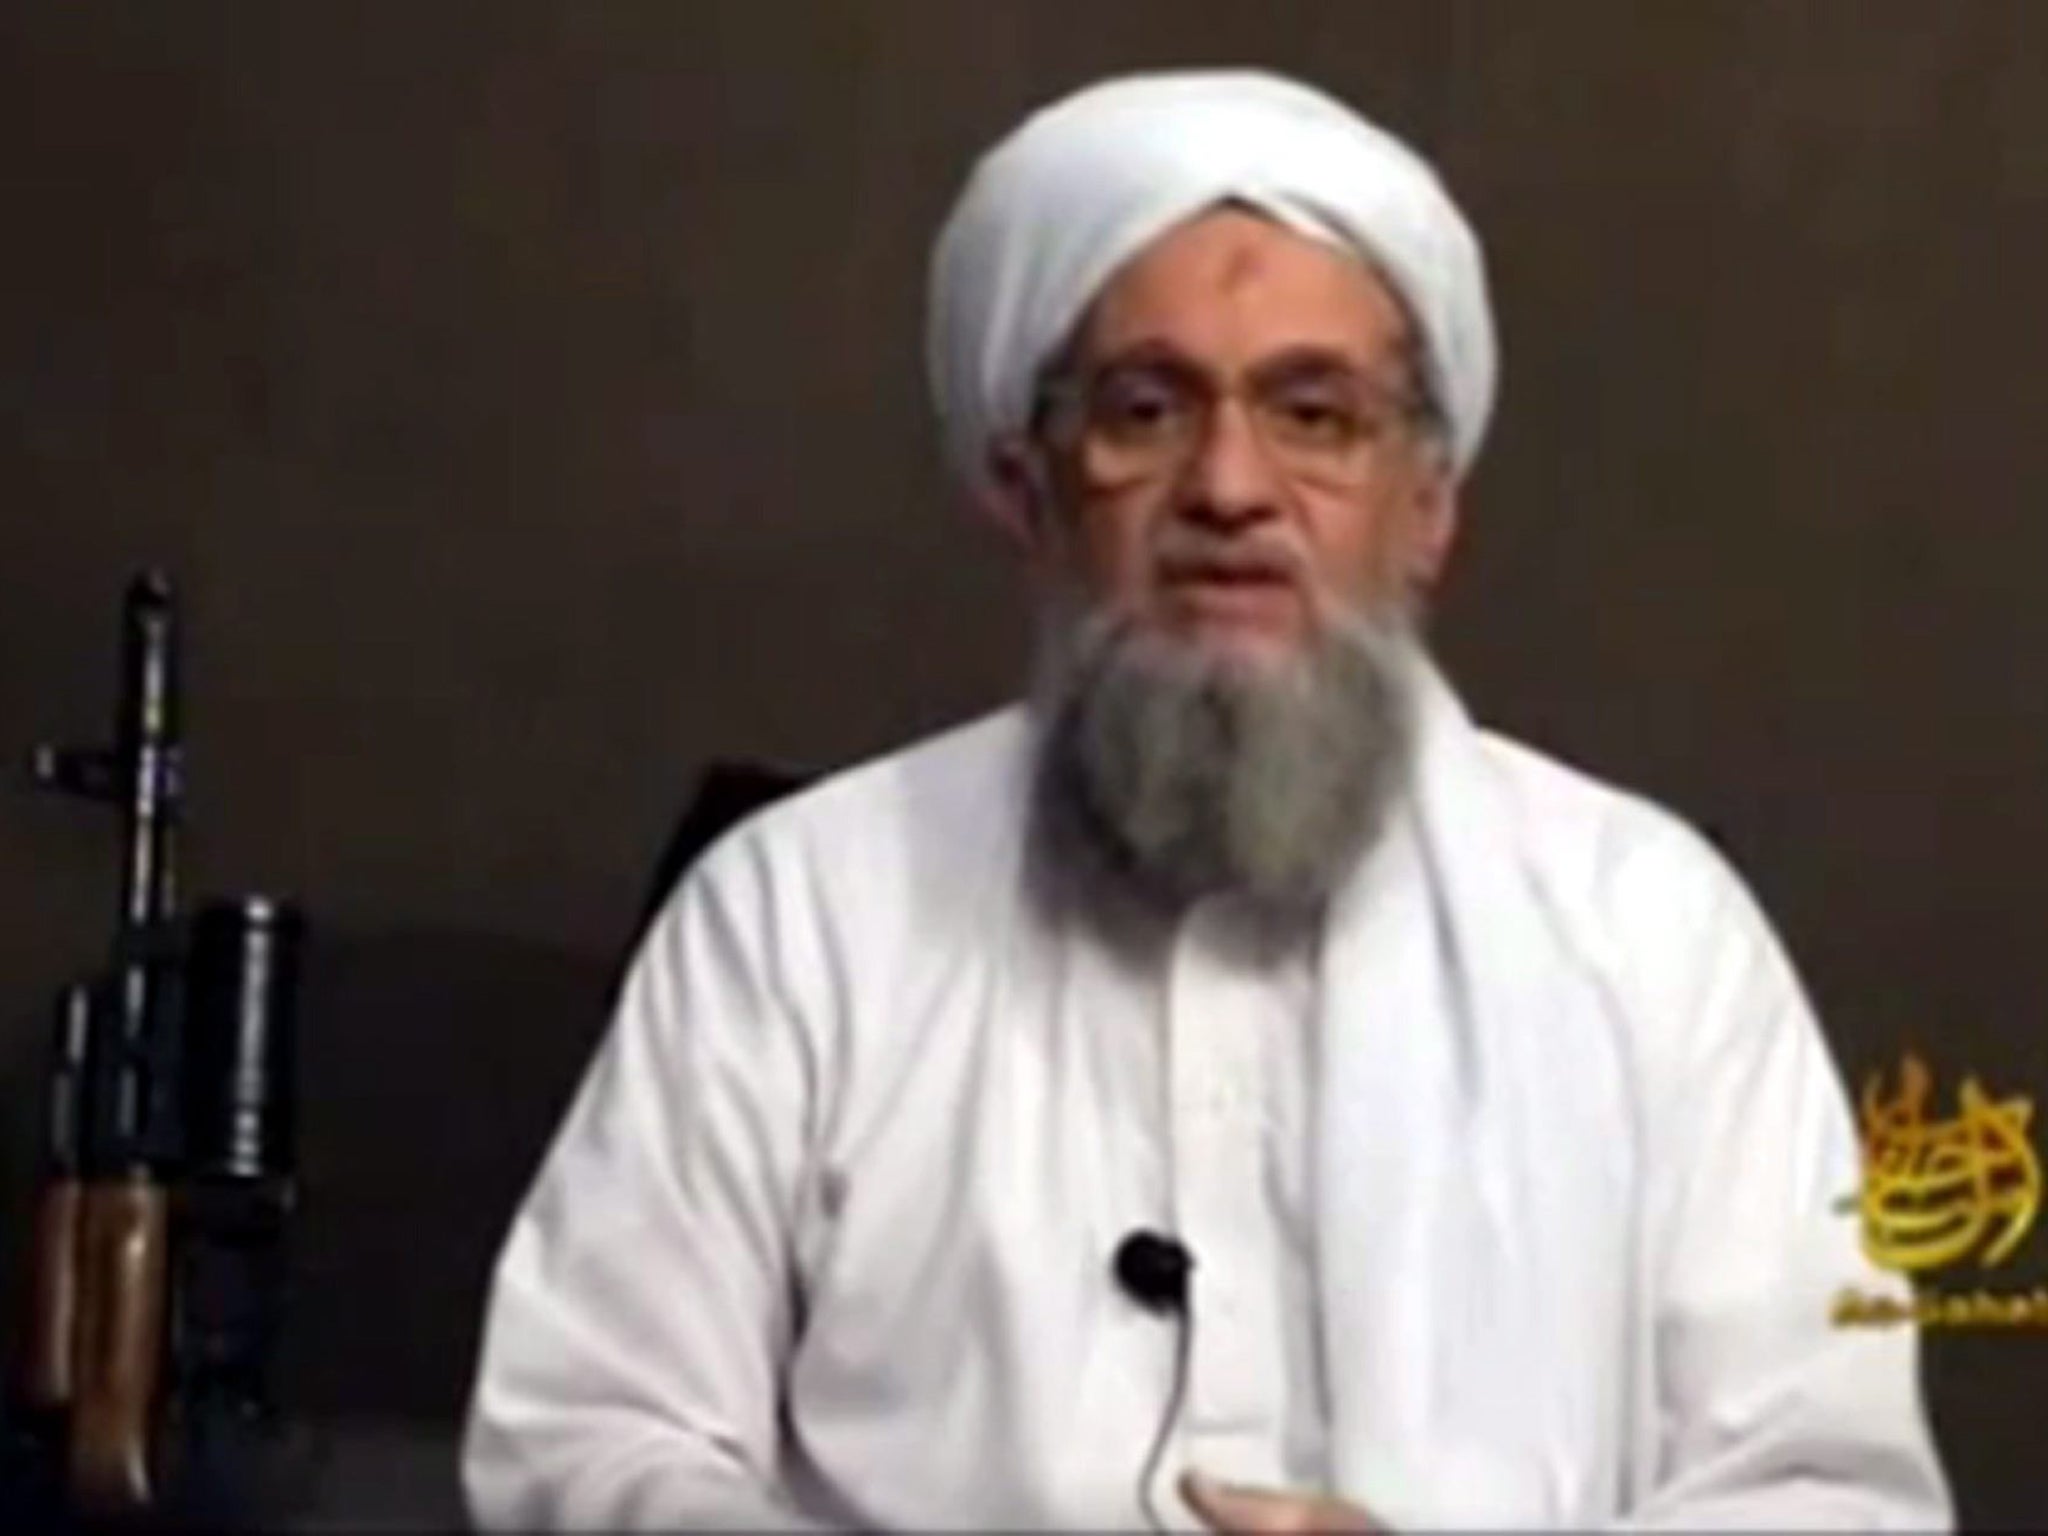 Al-Qa’ida leader Ayman al-Zawahiri wants to “raise the flag of jihad” across South Asia